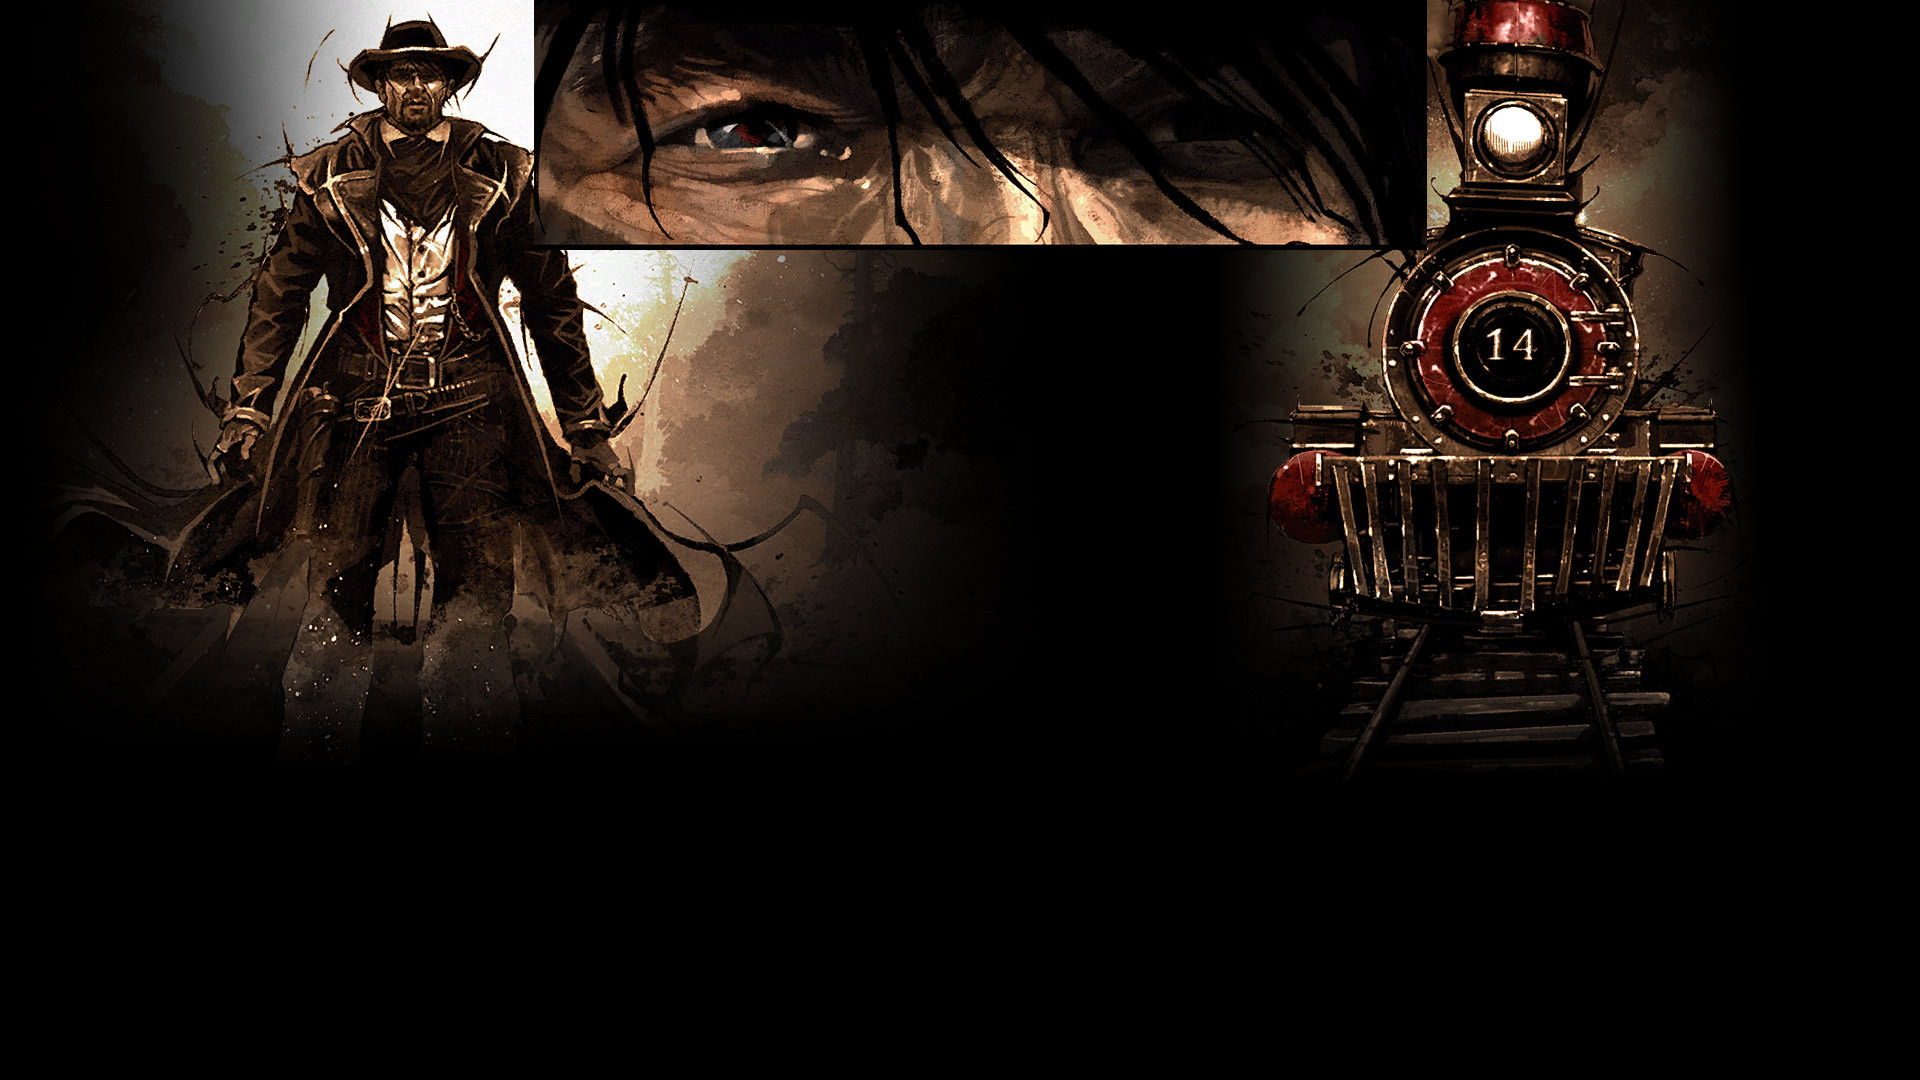 Video Game Call Of Juarez: Gunslinger HD Wallpaper | Background Image